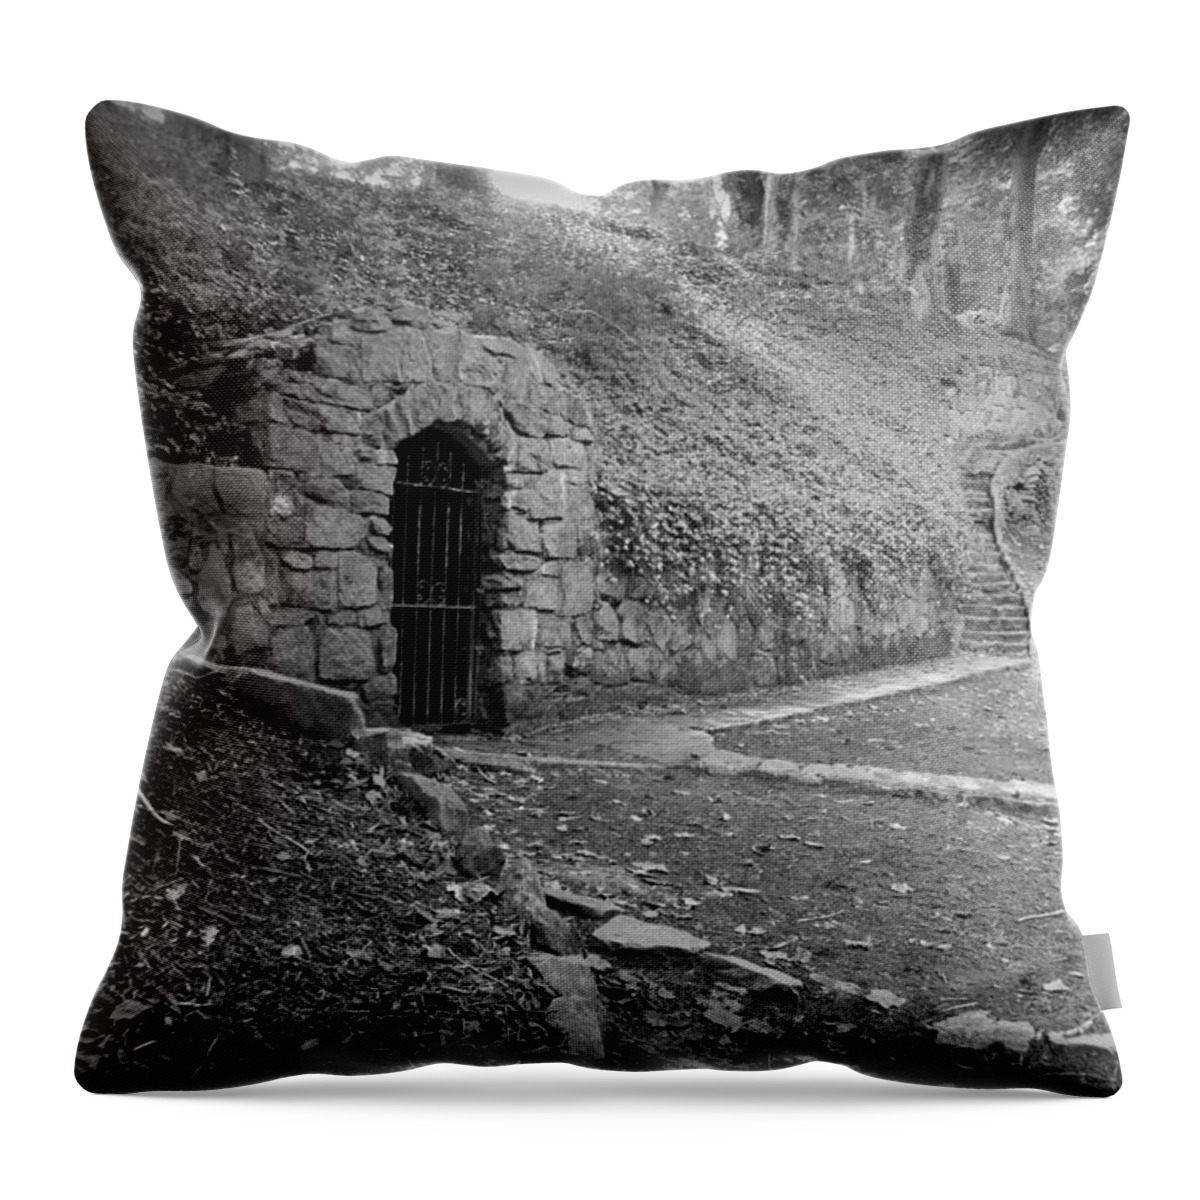 Kelly Hazel Throw Pillow featuring the photograph Iron Door in a Garden by Kelly Hazel